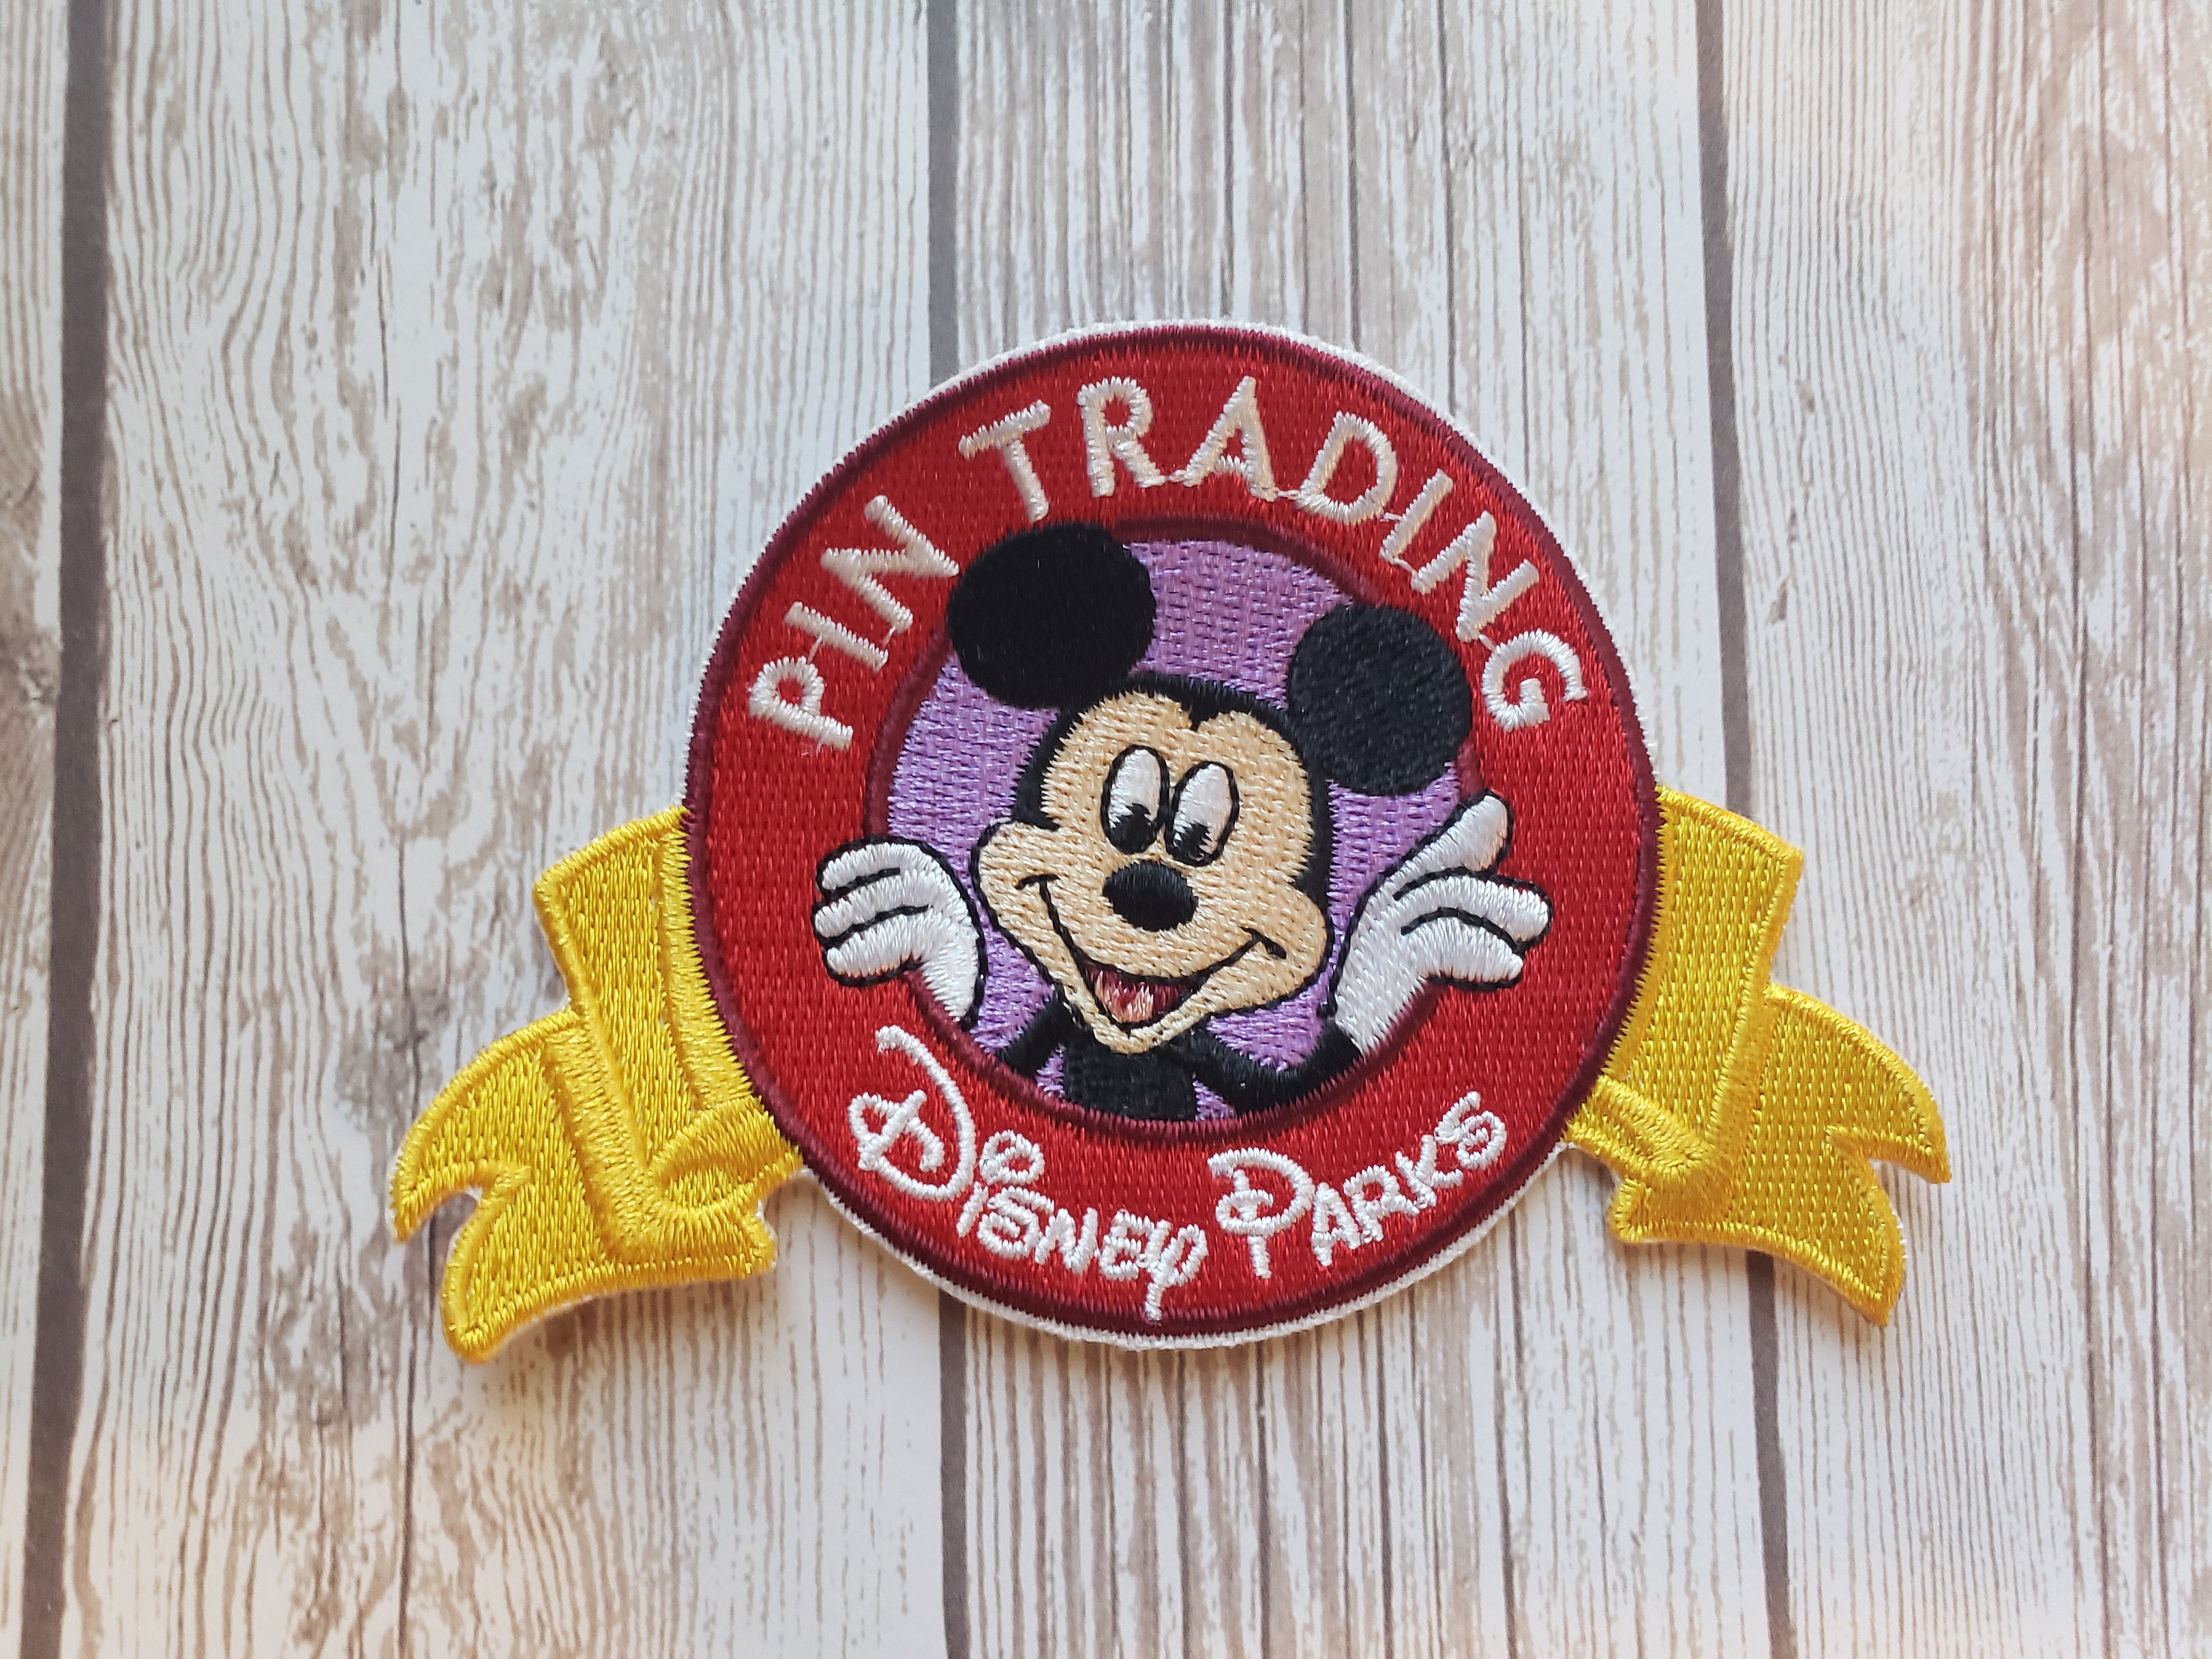 380 Disney Trading Pins ideas  disney trading pins, disney, disney pins